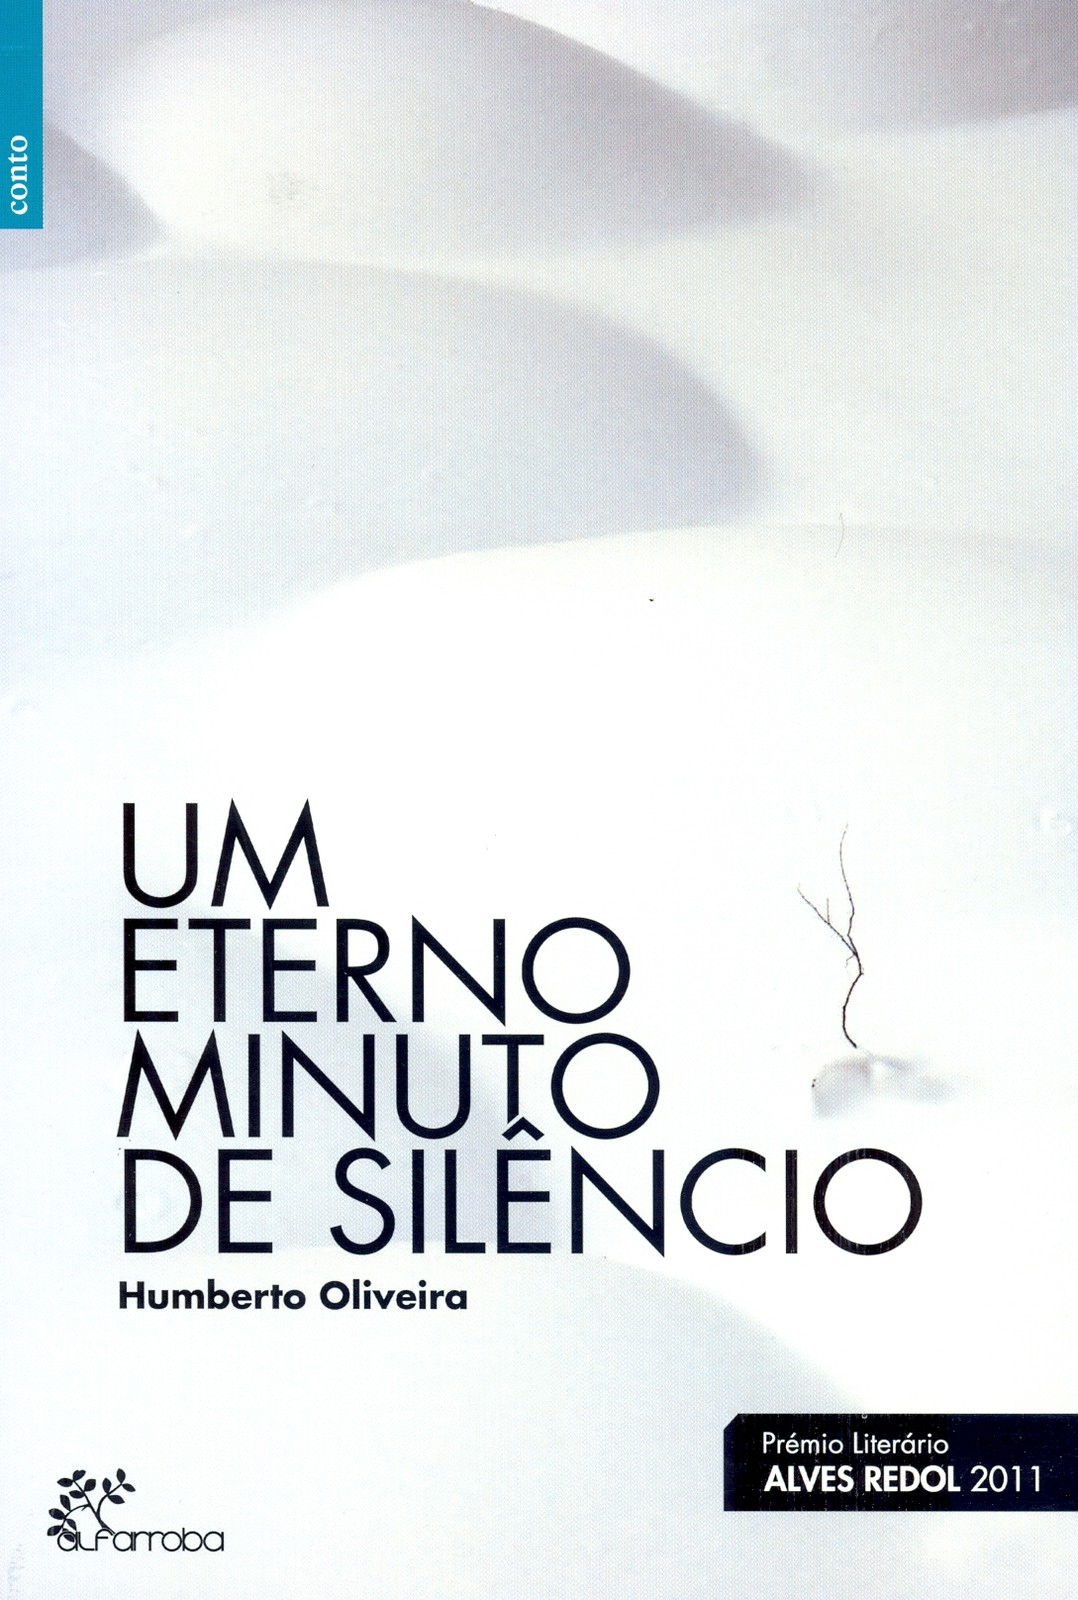 Humberto Oliveira - Um eterno minuto de silêncio